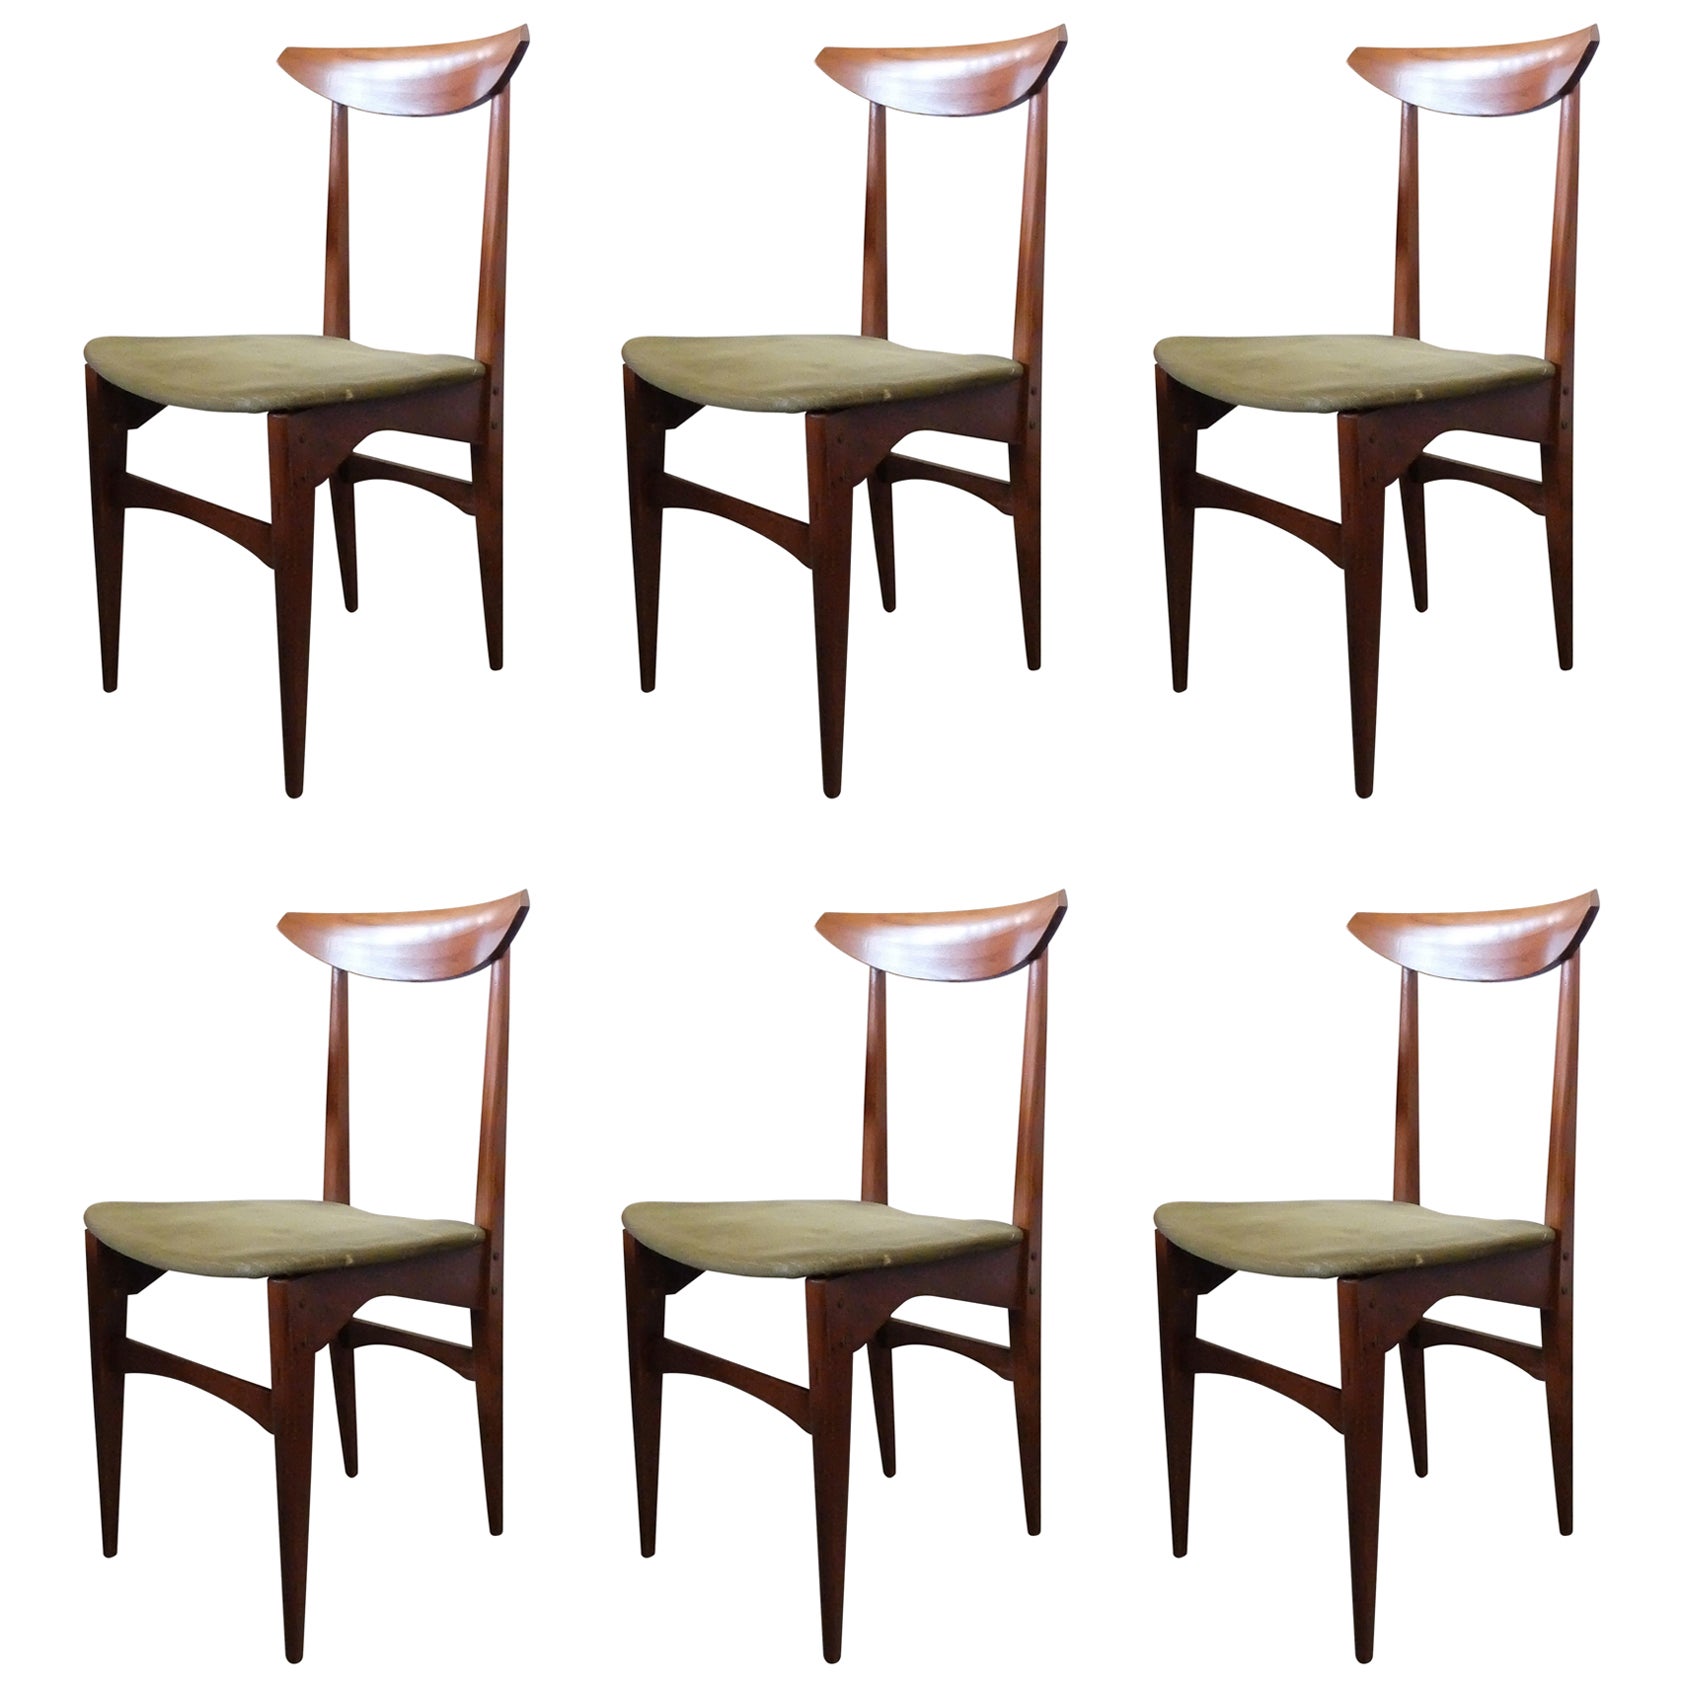 Set of 6 Italian Mid-Century Modern Wooden Dining Room Chairs, circa 1950